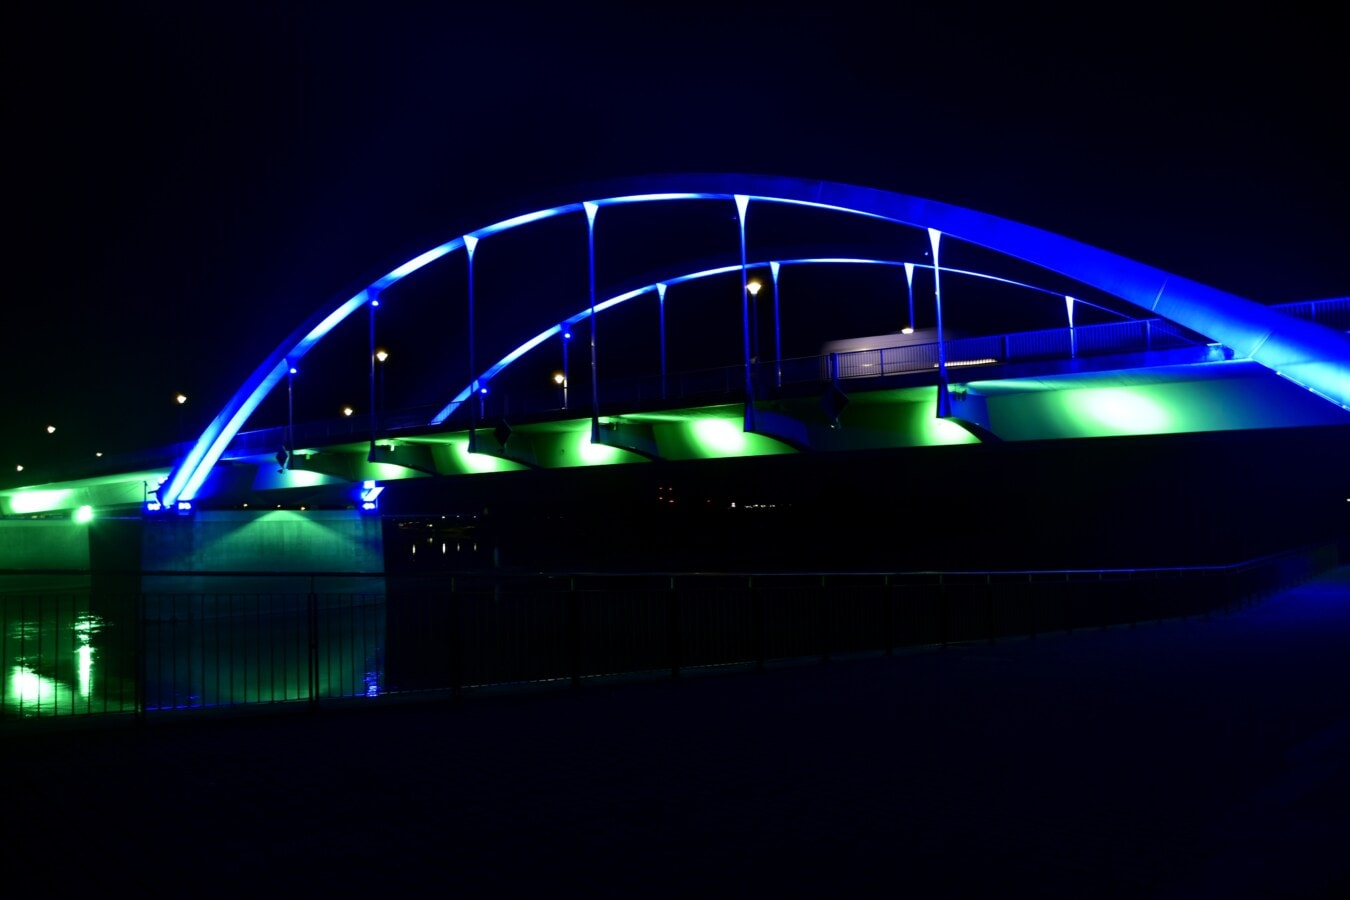 nacht, donker, donker blauw, verlichting, neon, het platform, bouw, brug, licht, stedelijke